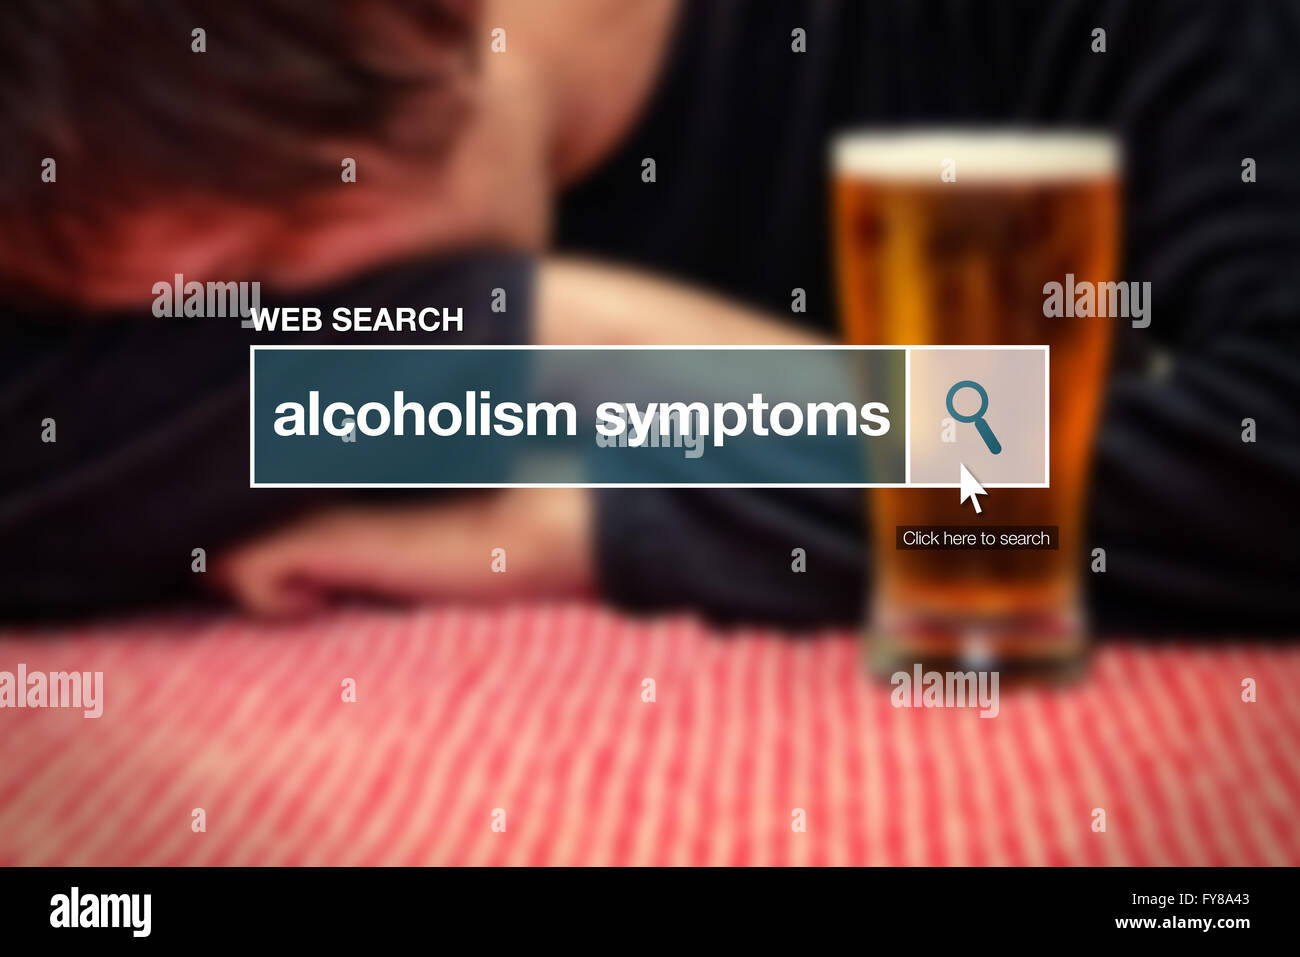 Web Suche Bar Glossarbegriff - Alkoholismus Symptome Definition im Internet Glossar. Stockfoto